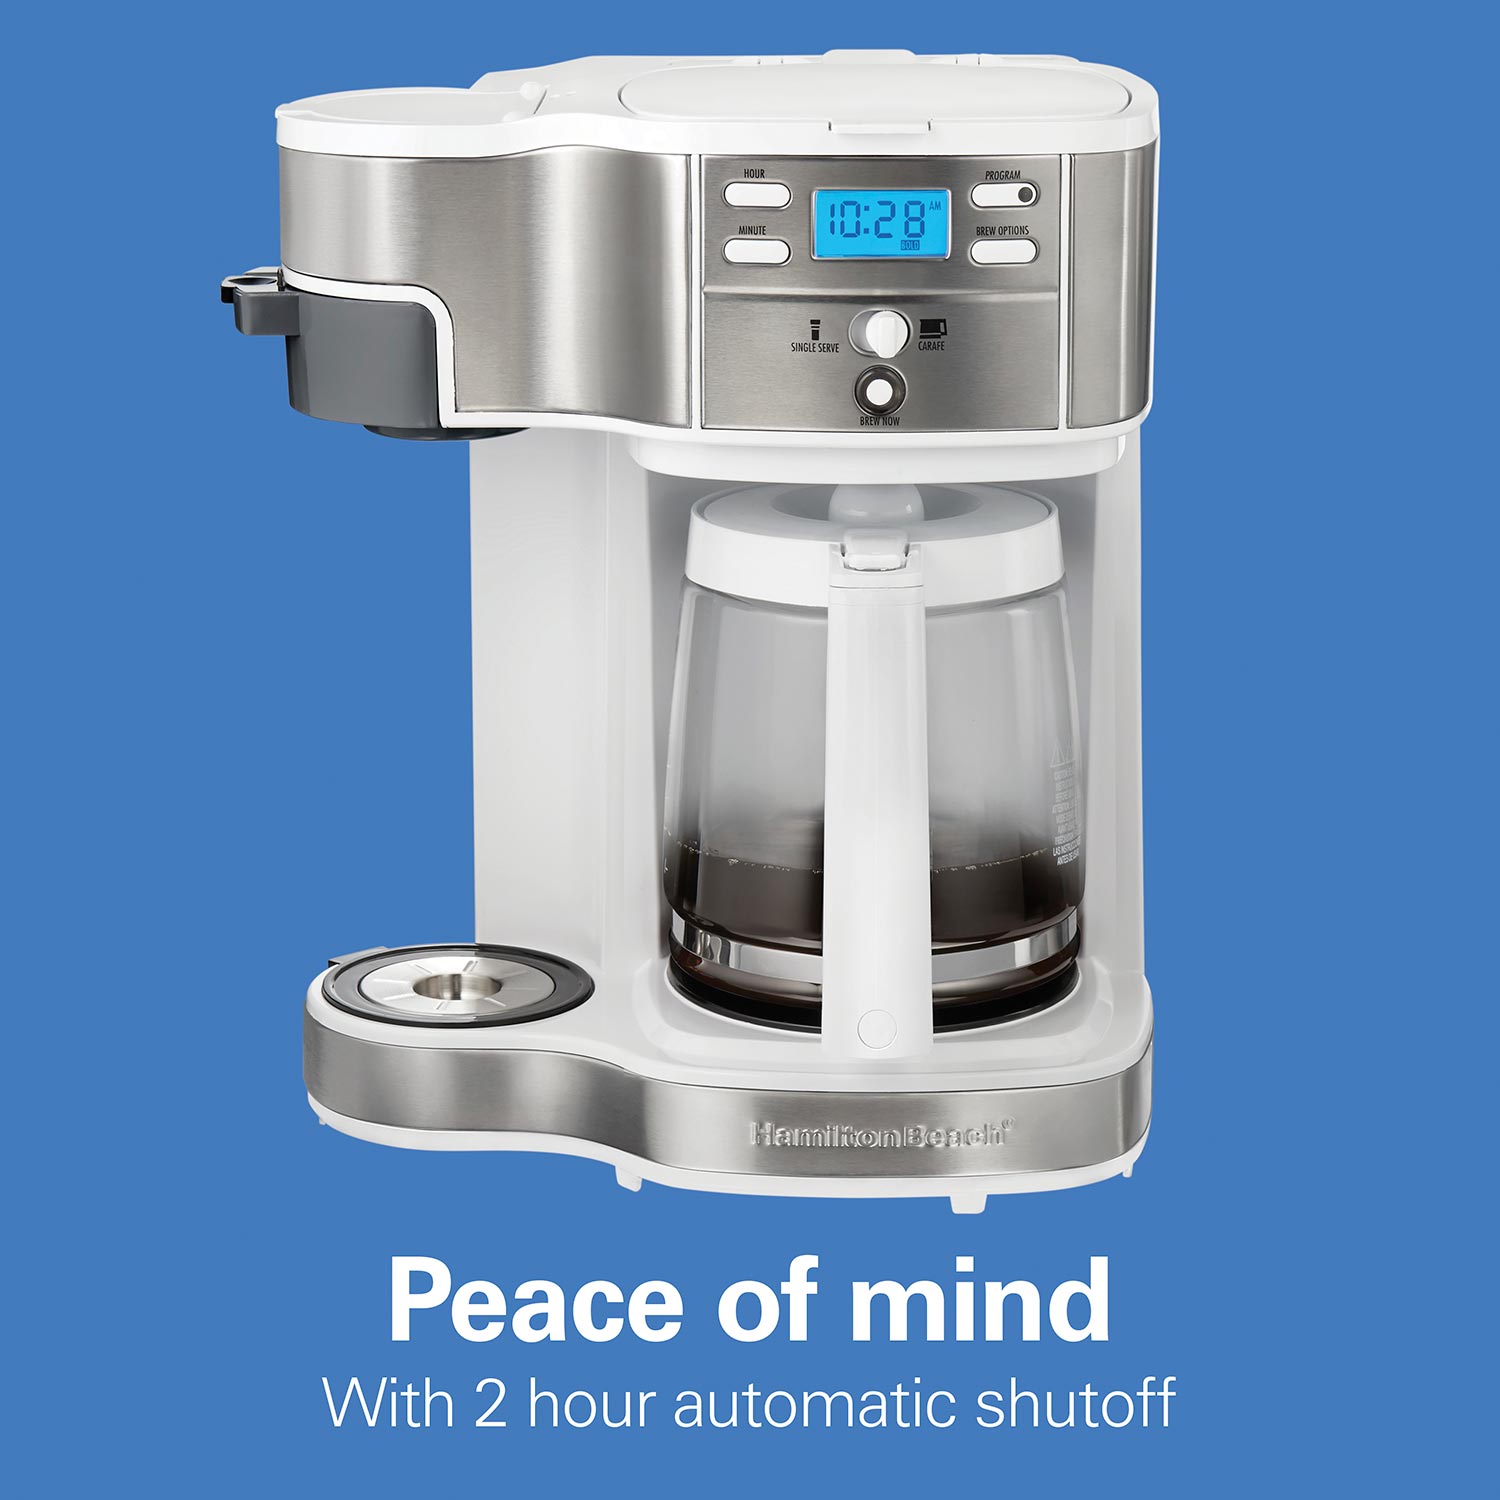 Hamilton Beach 12 Cup 2-Way Programmable Coffee Maker White